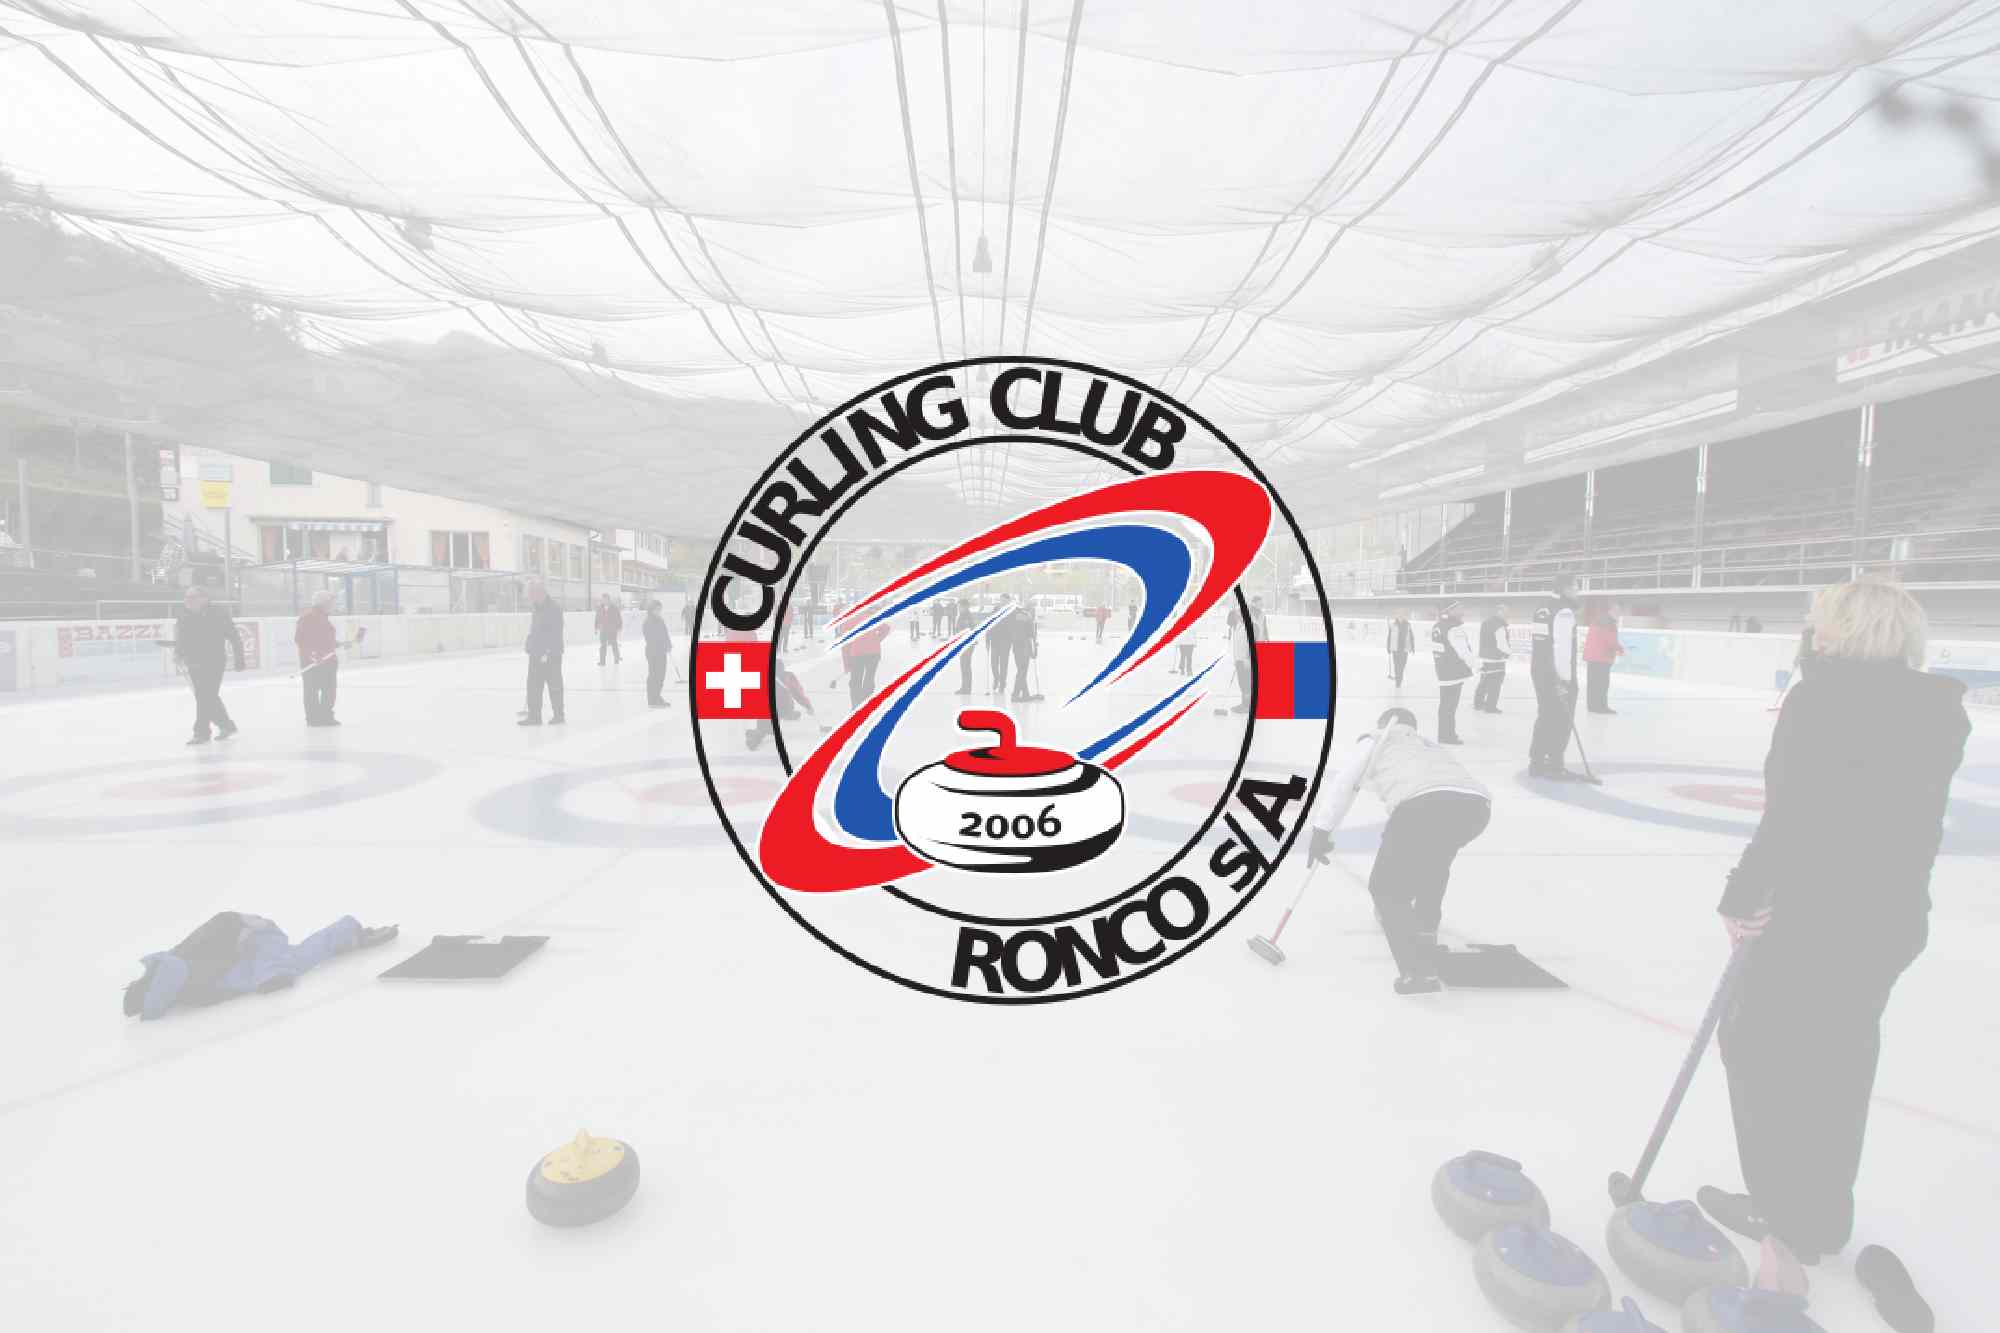 Curling Club Ronco s/Ascona